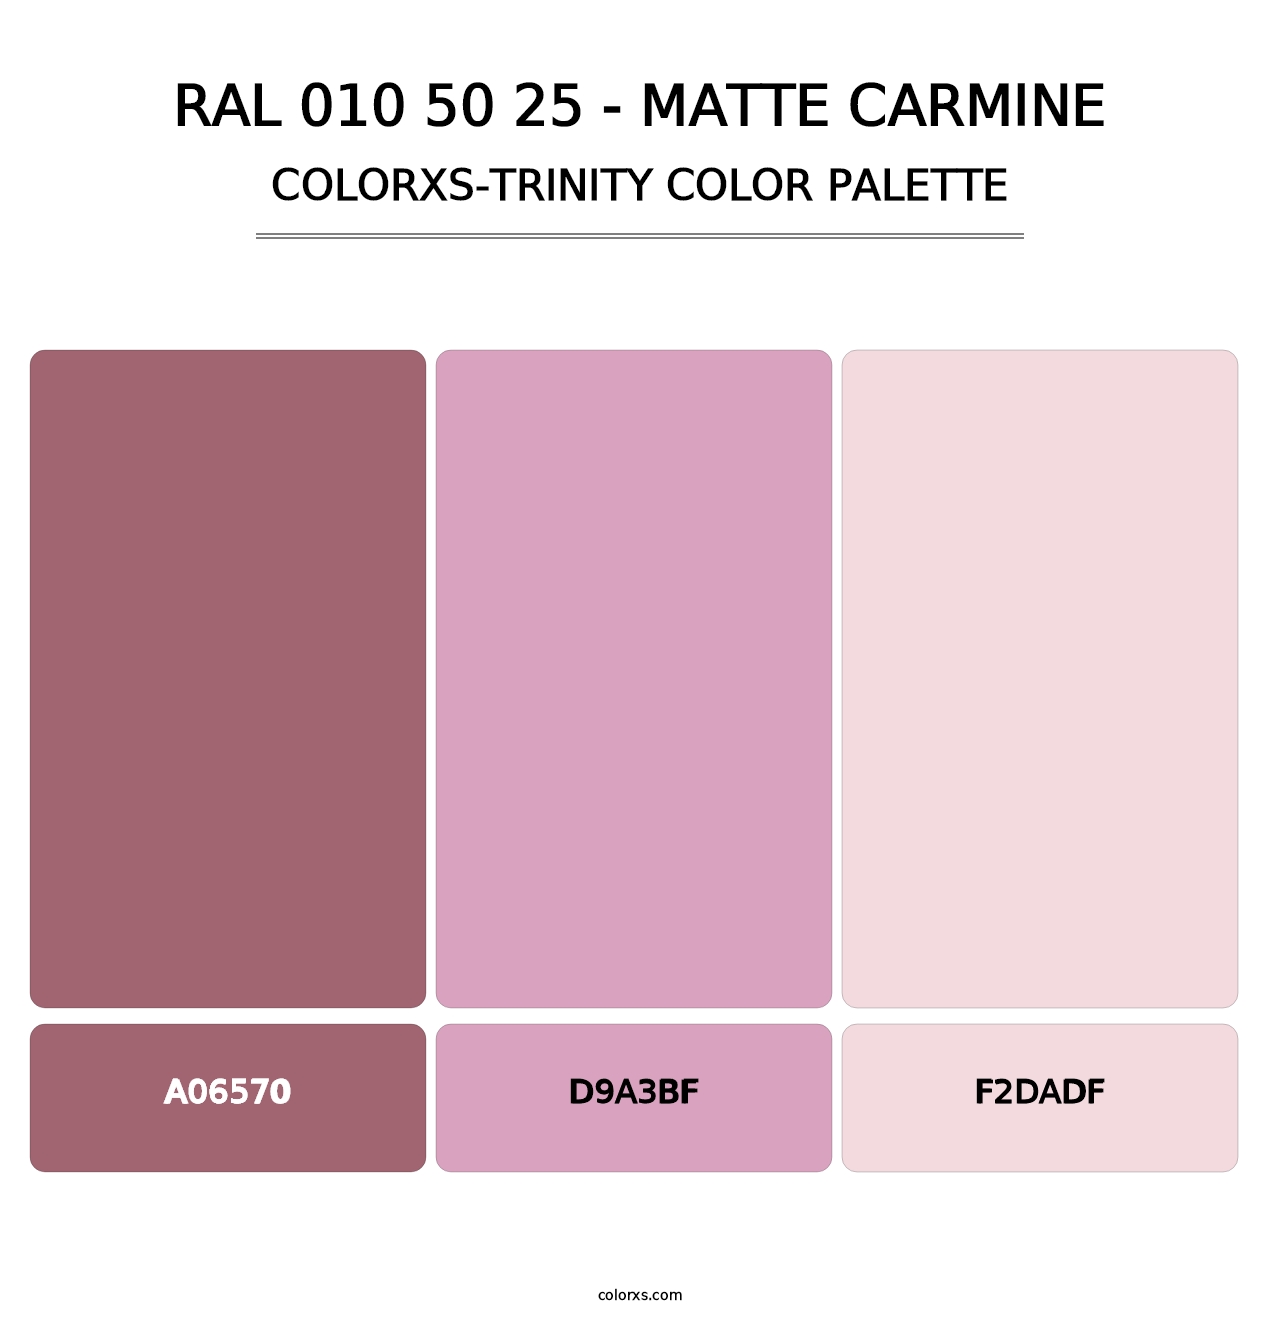 RAL 010 50 25 - Matte Carmine - Colorxs Trinity Palette